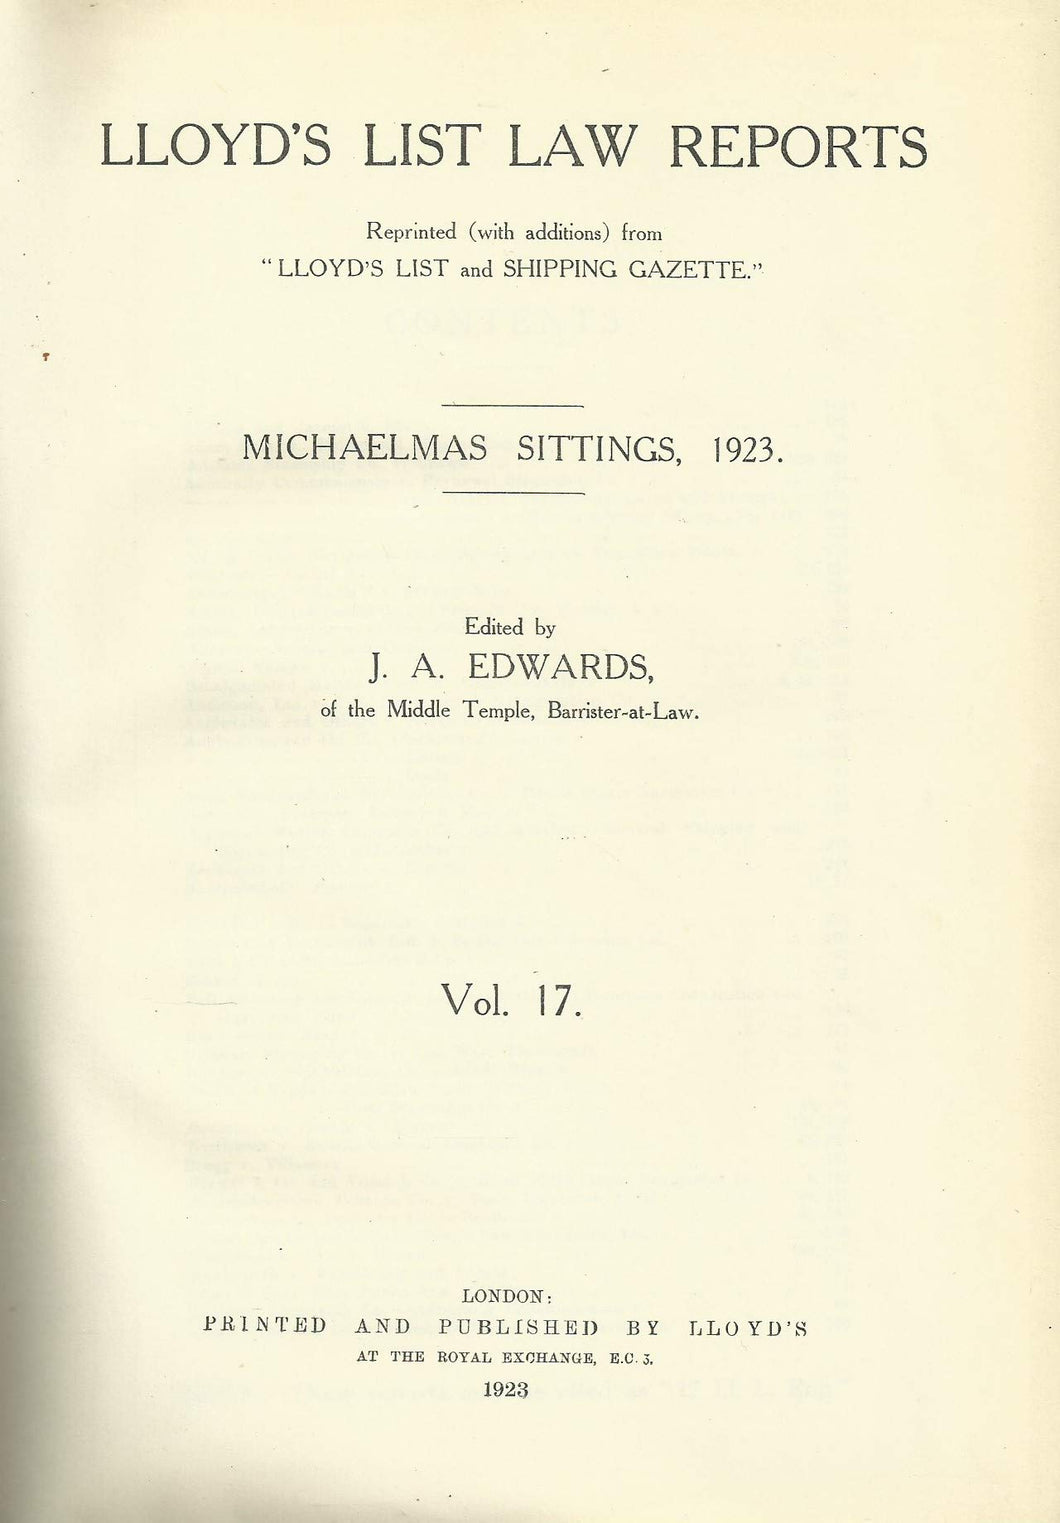 Lloyd's List Law Reports - Volume 17, Michaelmas Sittings, 1923